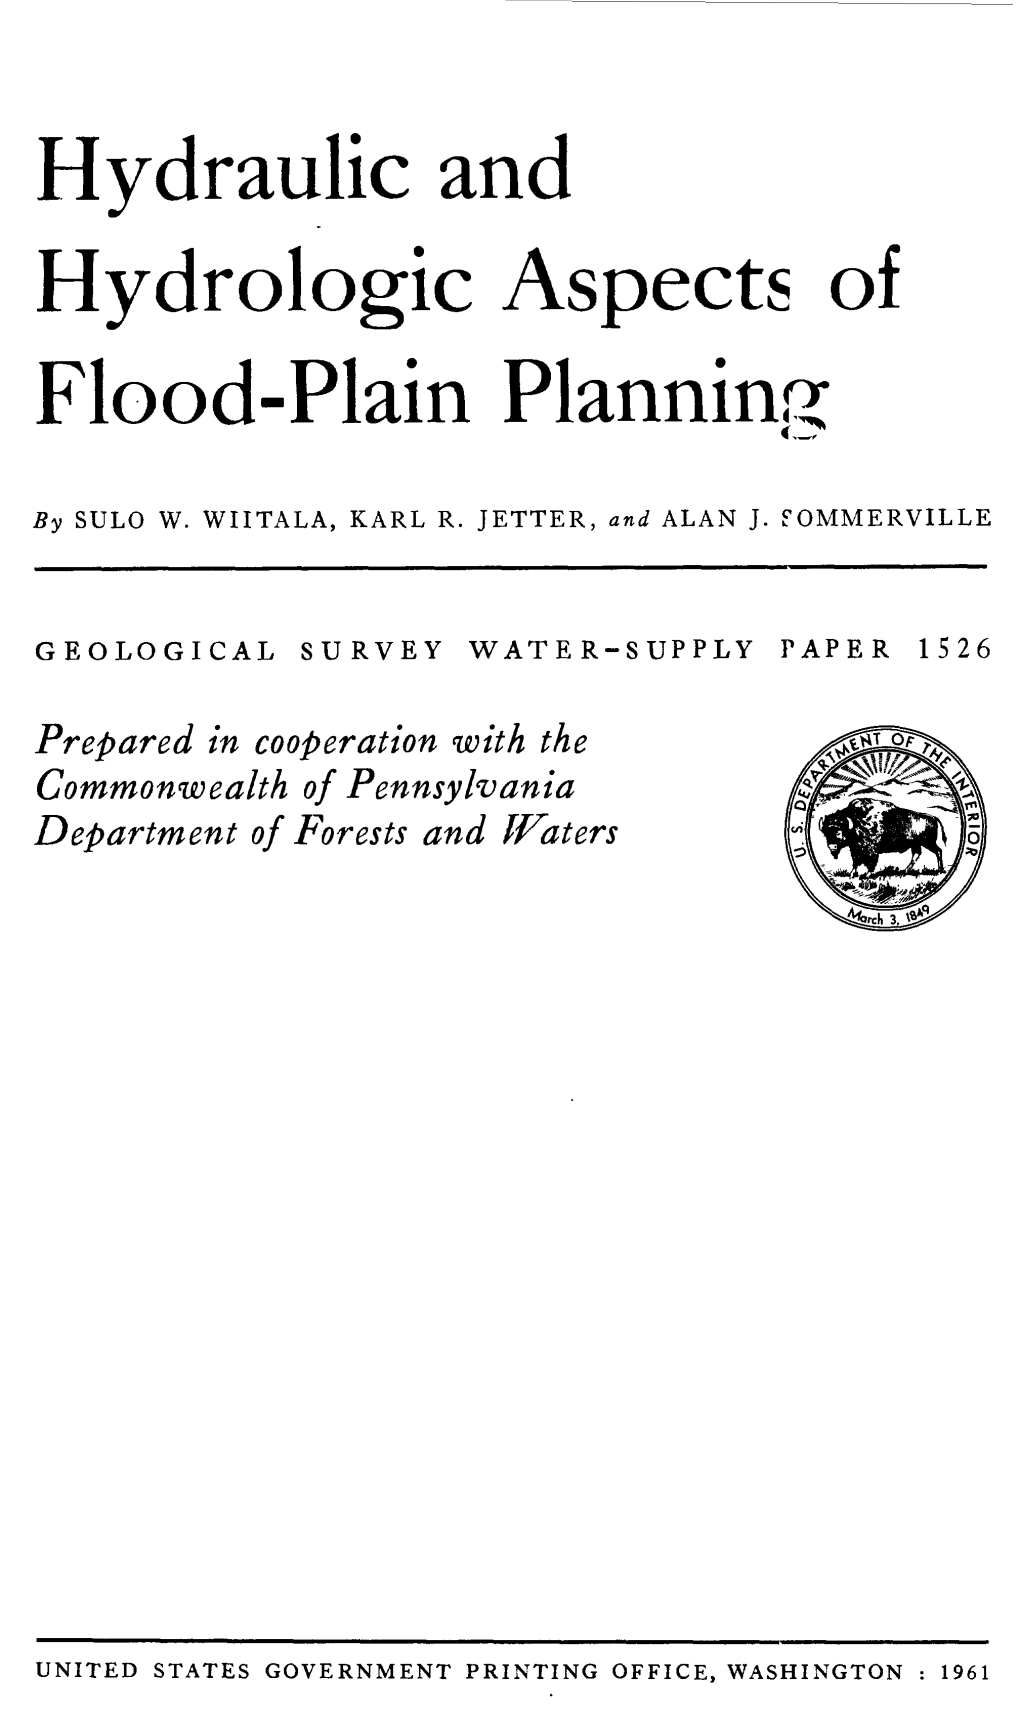 Hydraulic and Hydrologic Aspects of Flood-Plain Planning